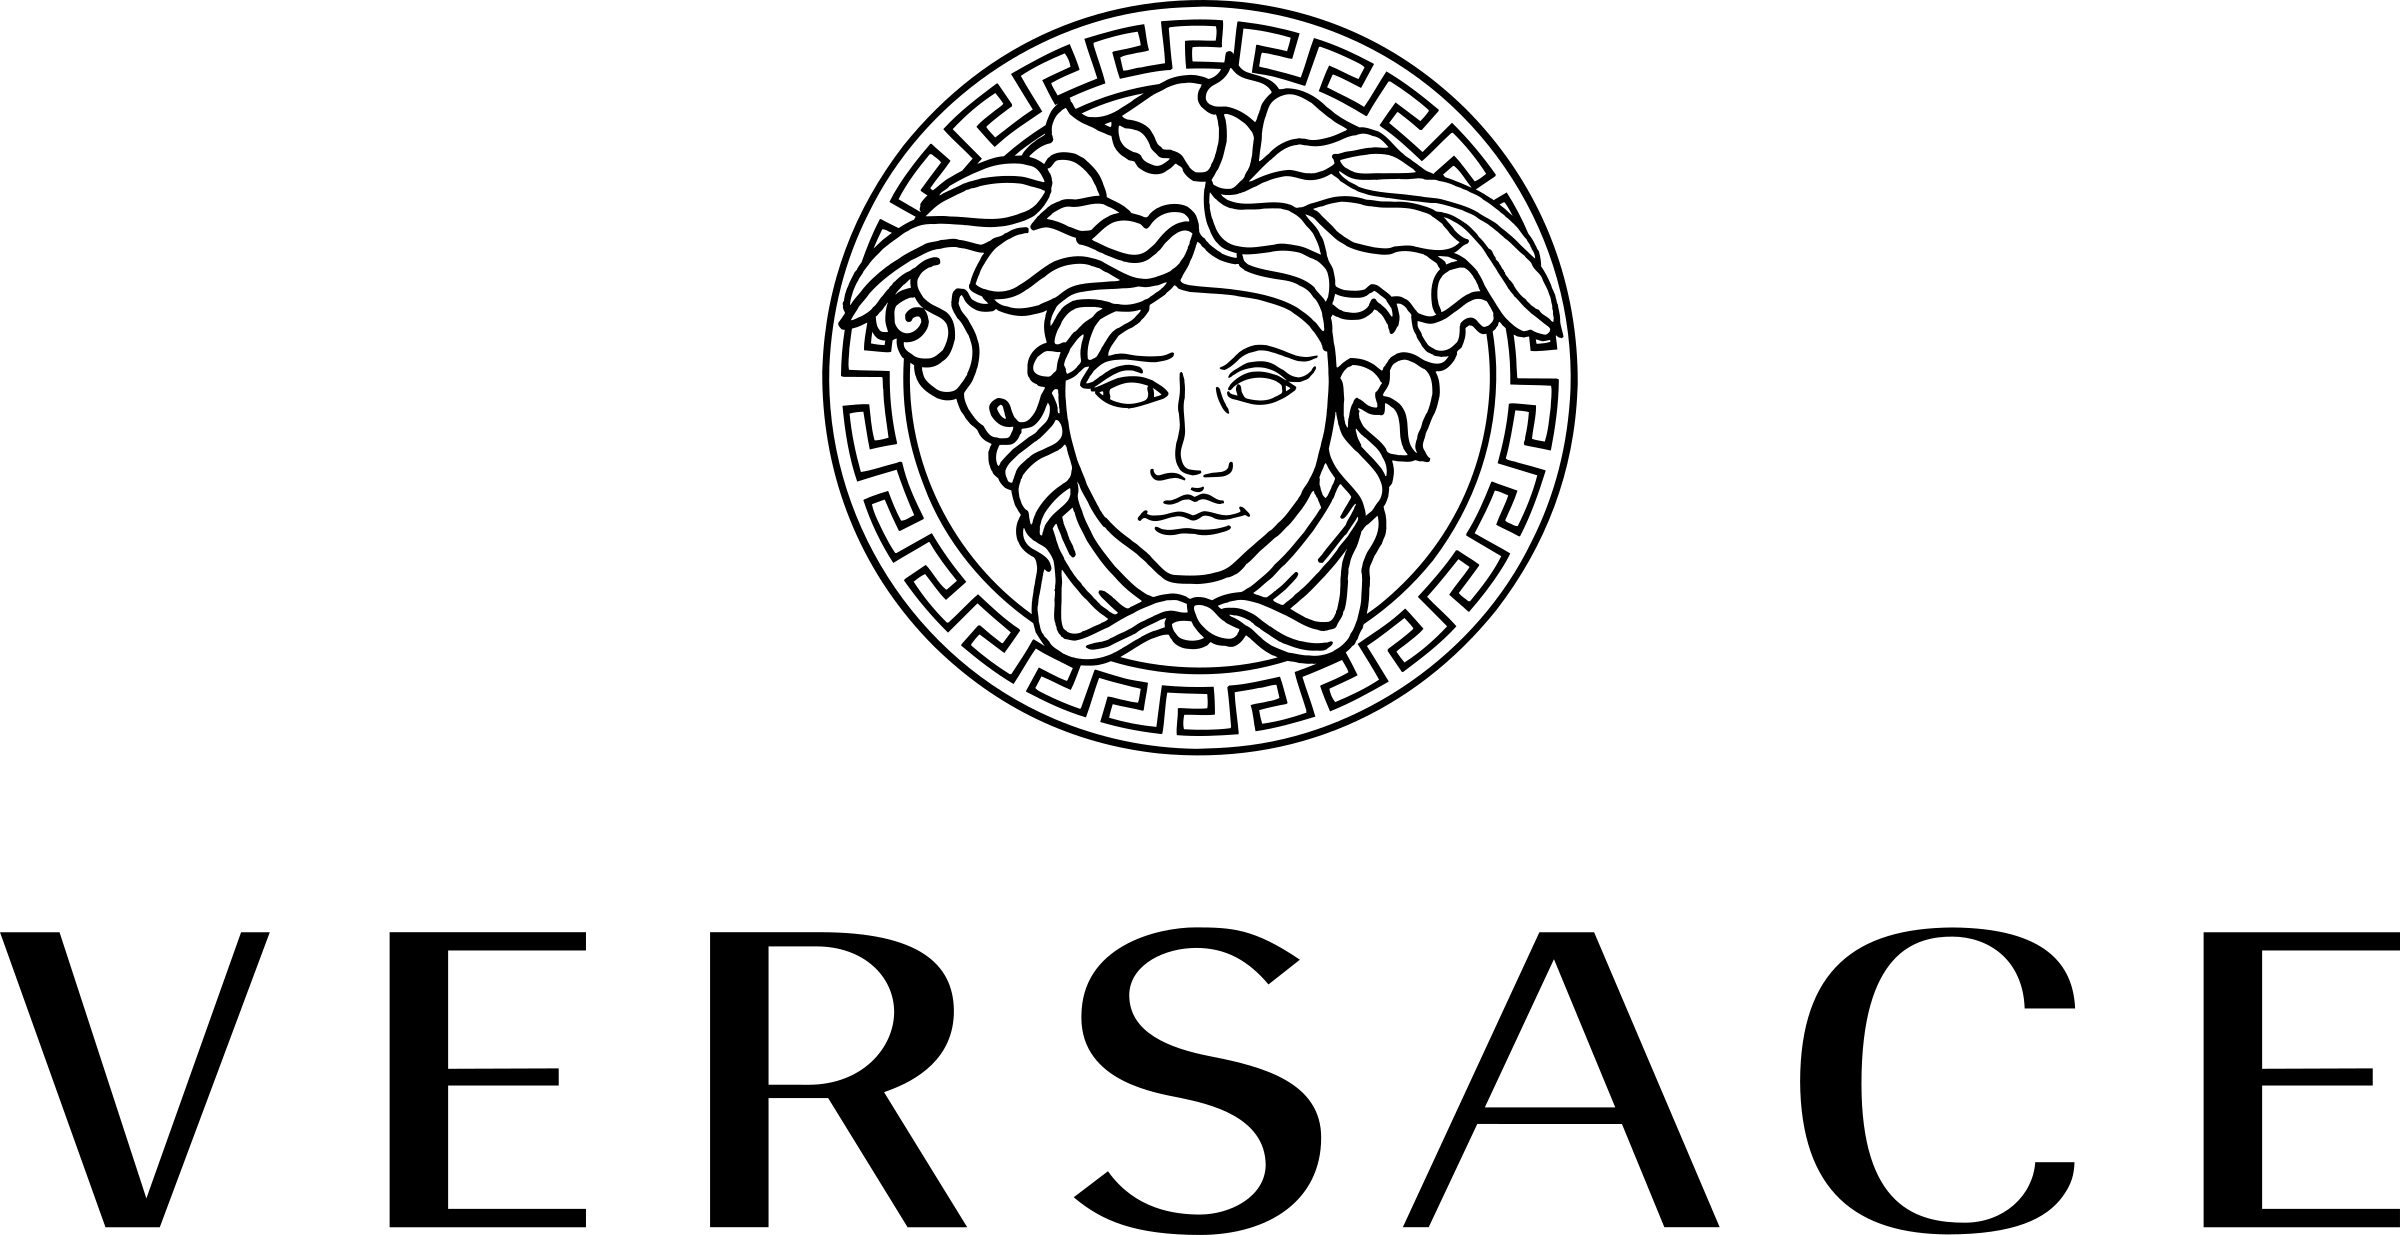 Versace - Logo